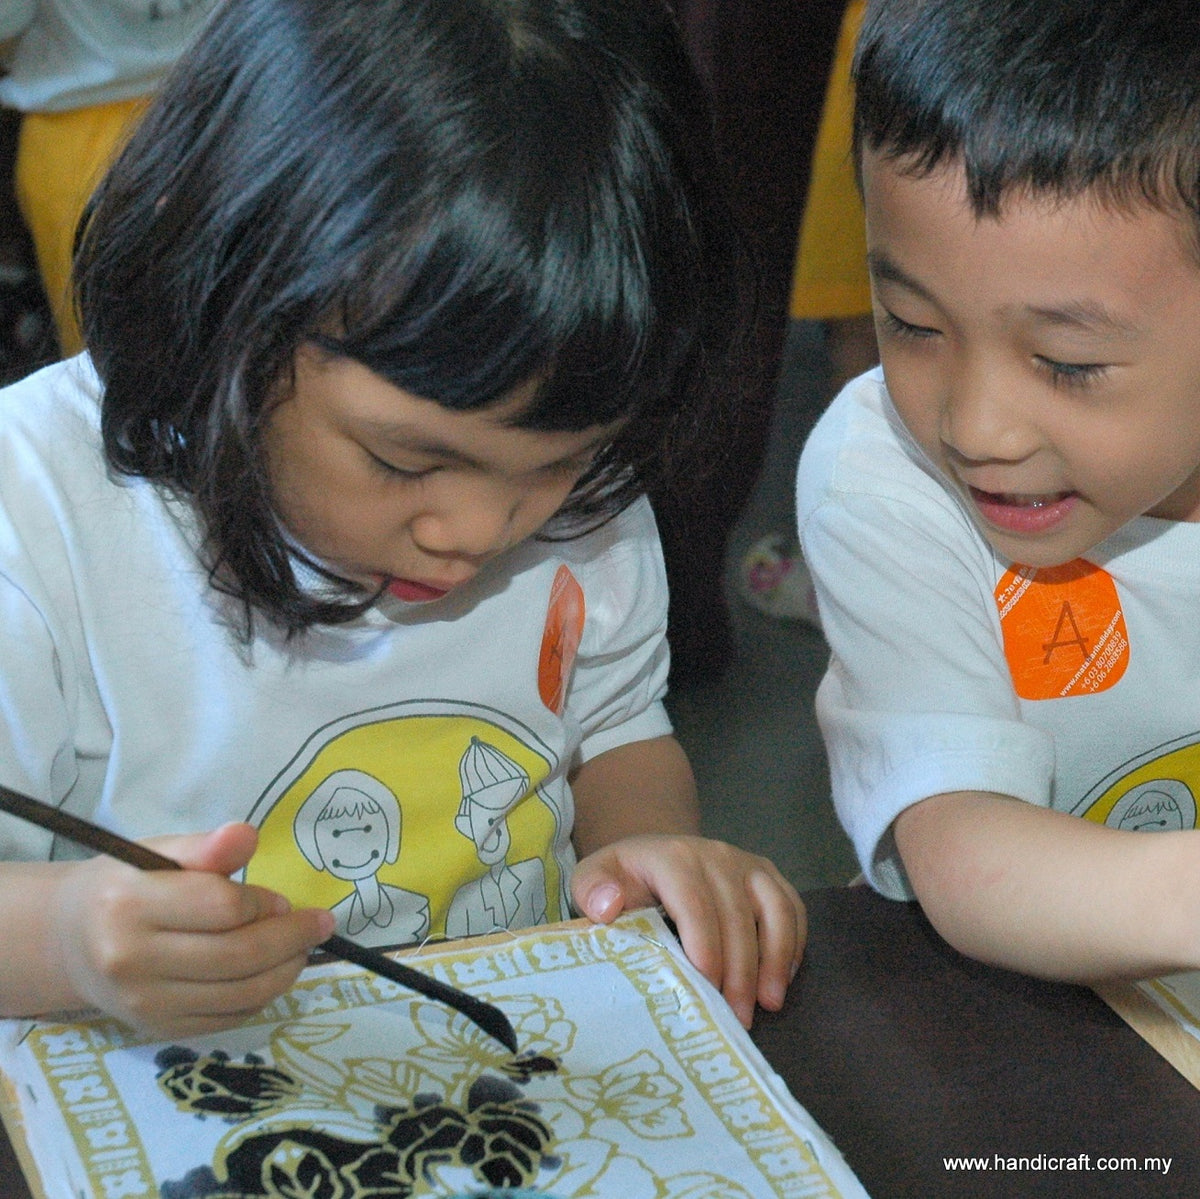 Let you kids be explore new crafts at home - batik coloring